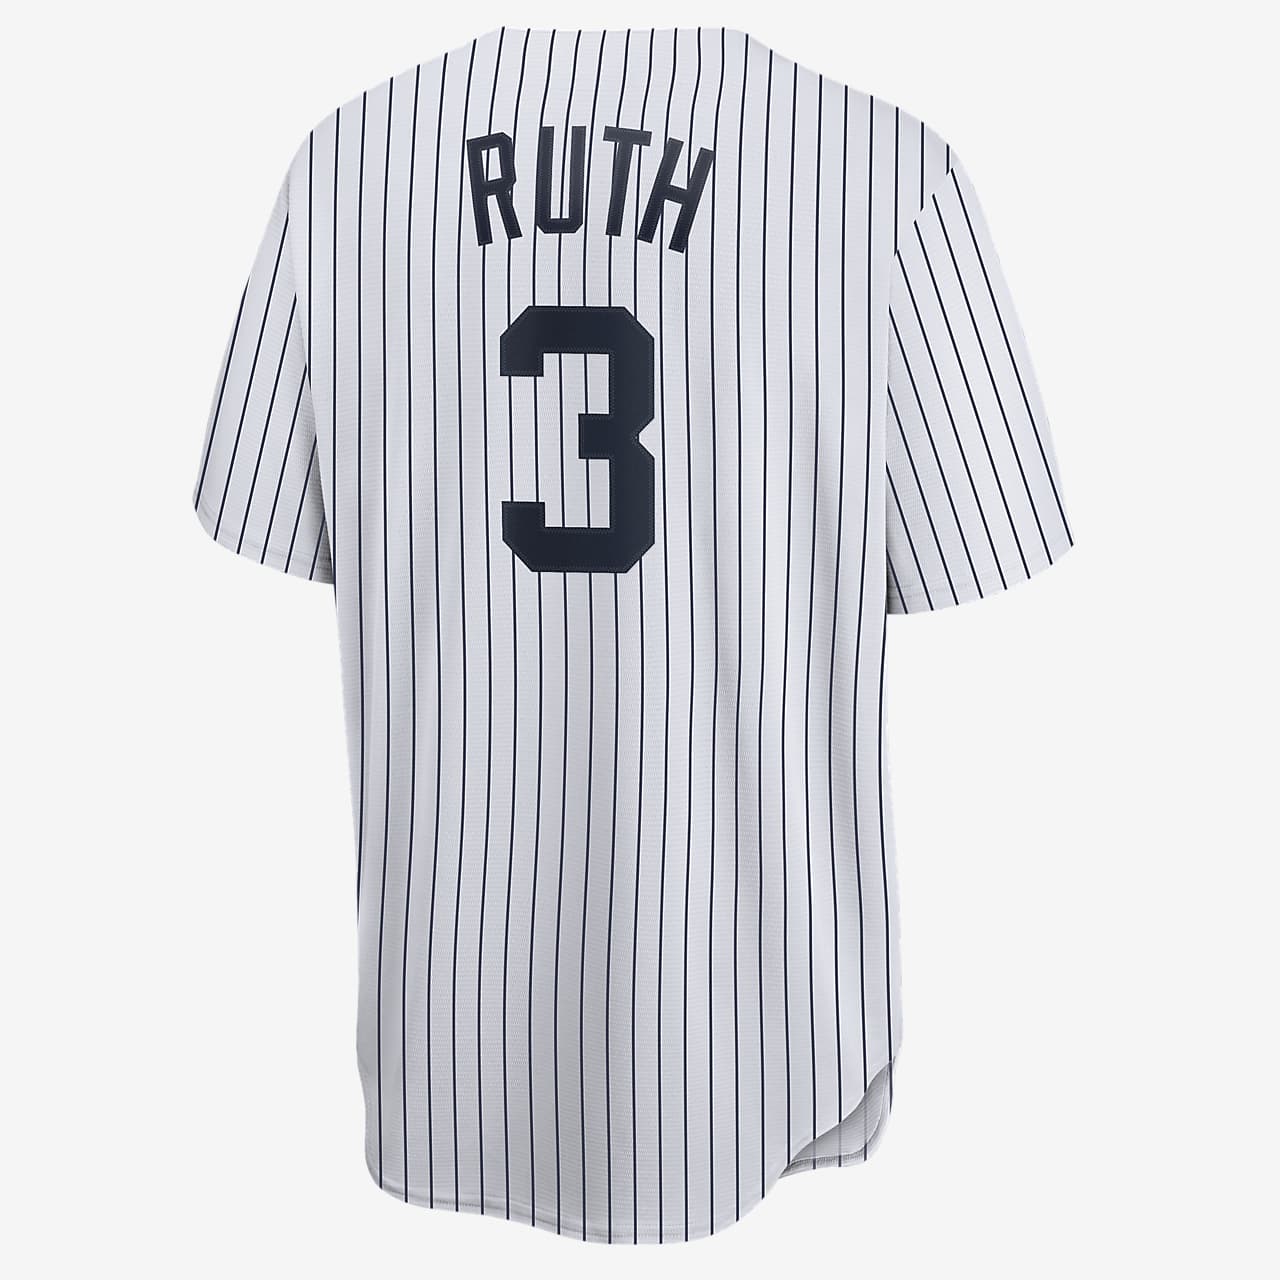 MLB New York Yankees (Babe Ruth) Men's Cooperstown Baseball Jersey